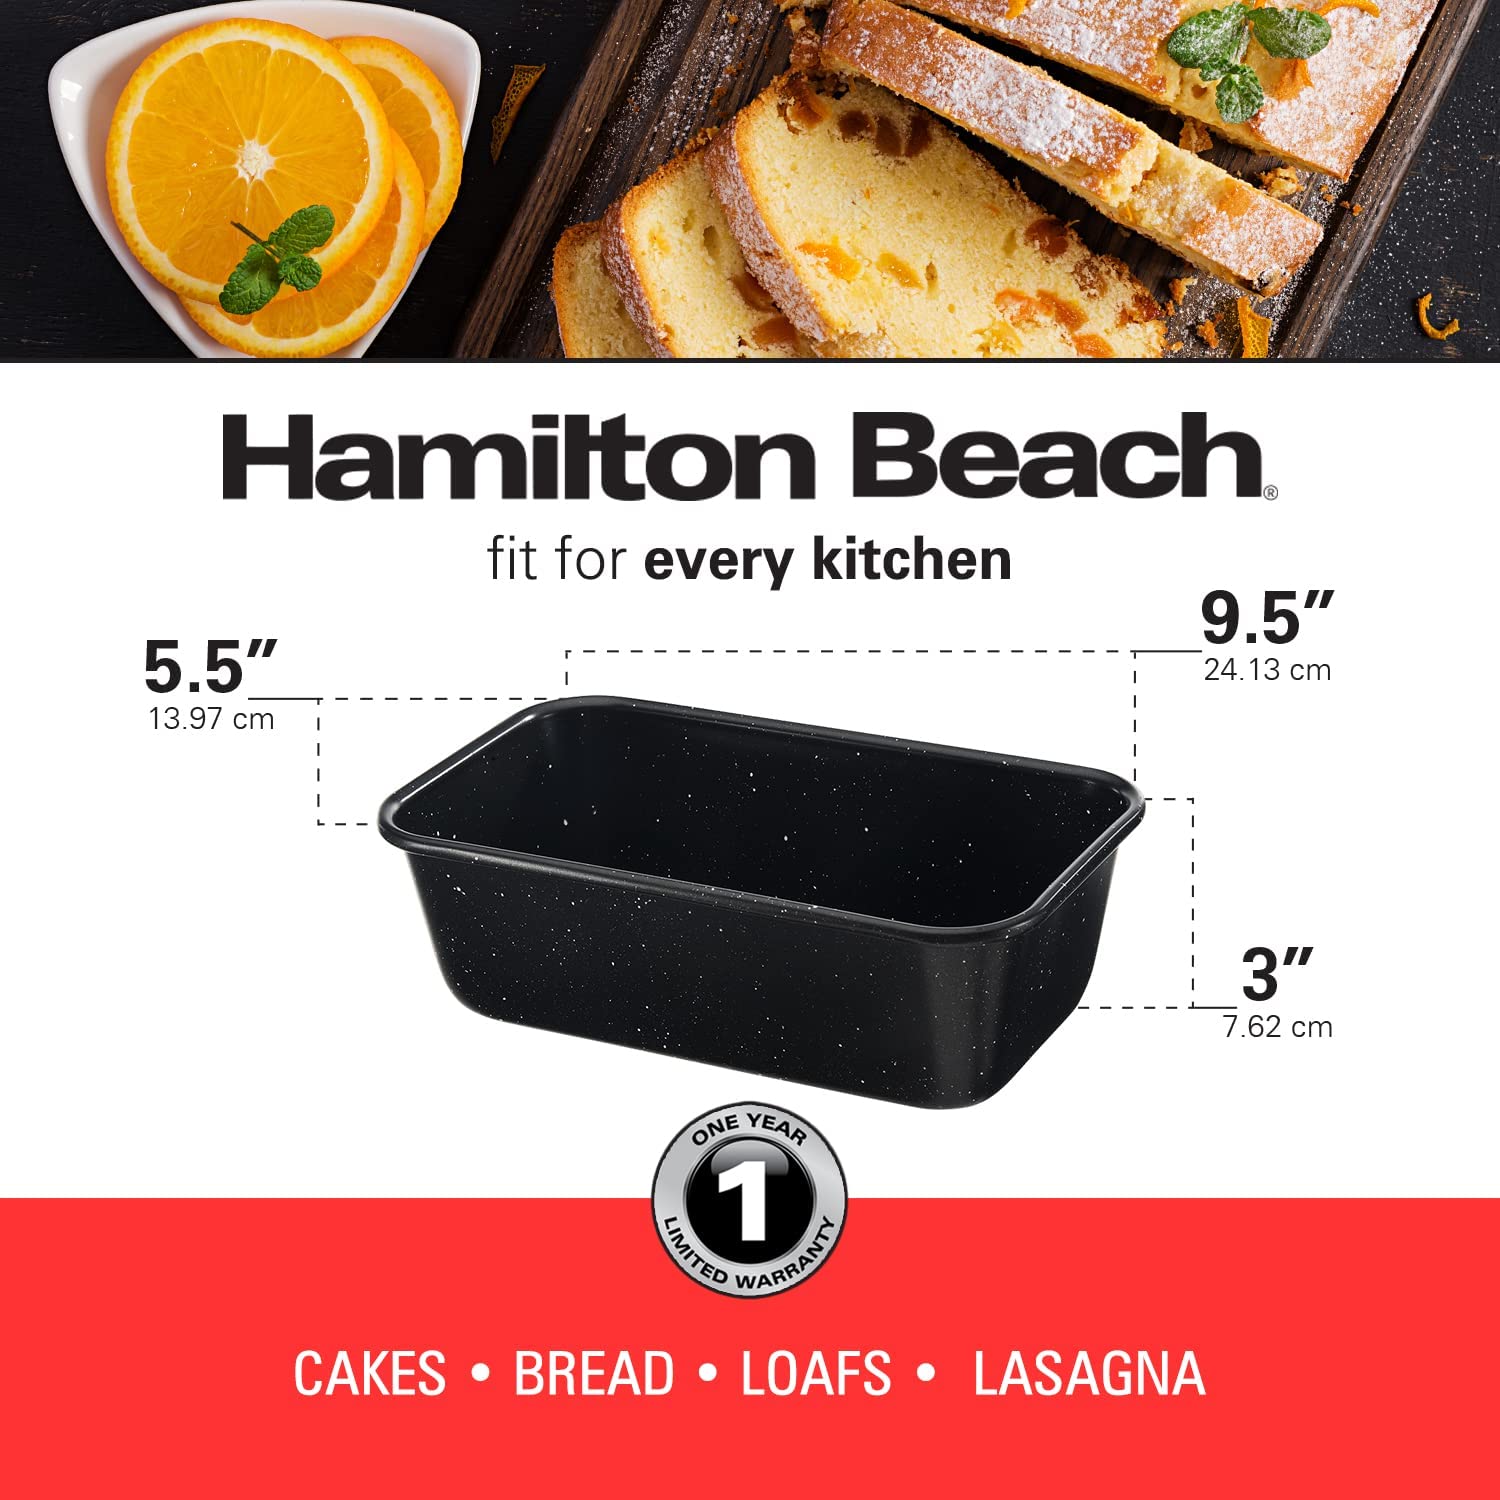 Hamilton Beach Square Cake Pan Nonstick Easy Release Carbon Steel Pan